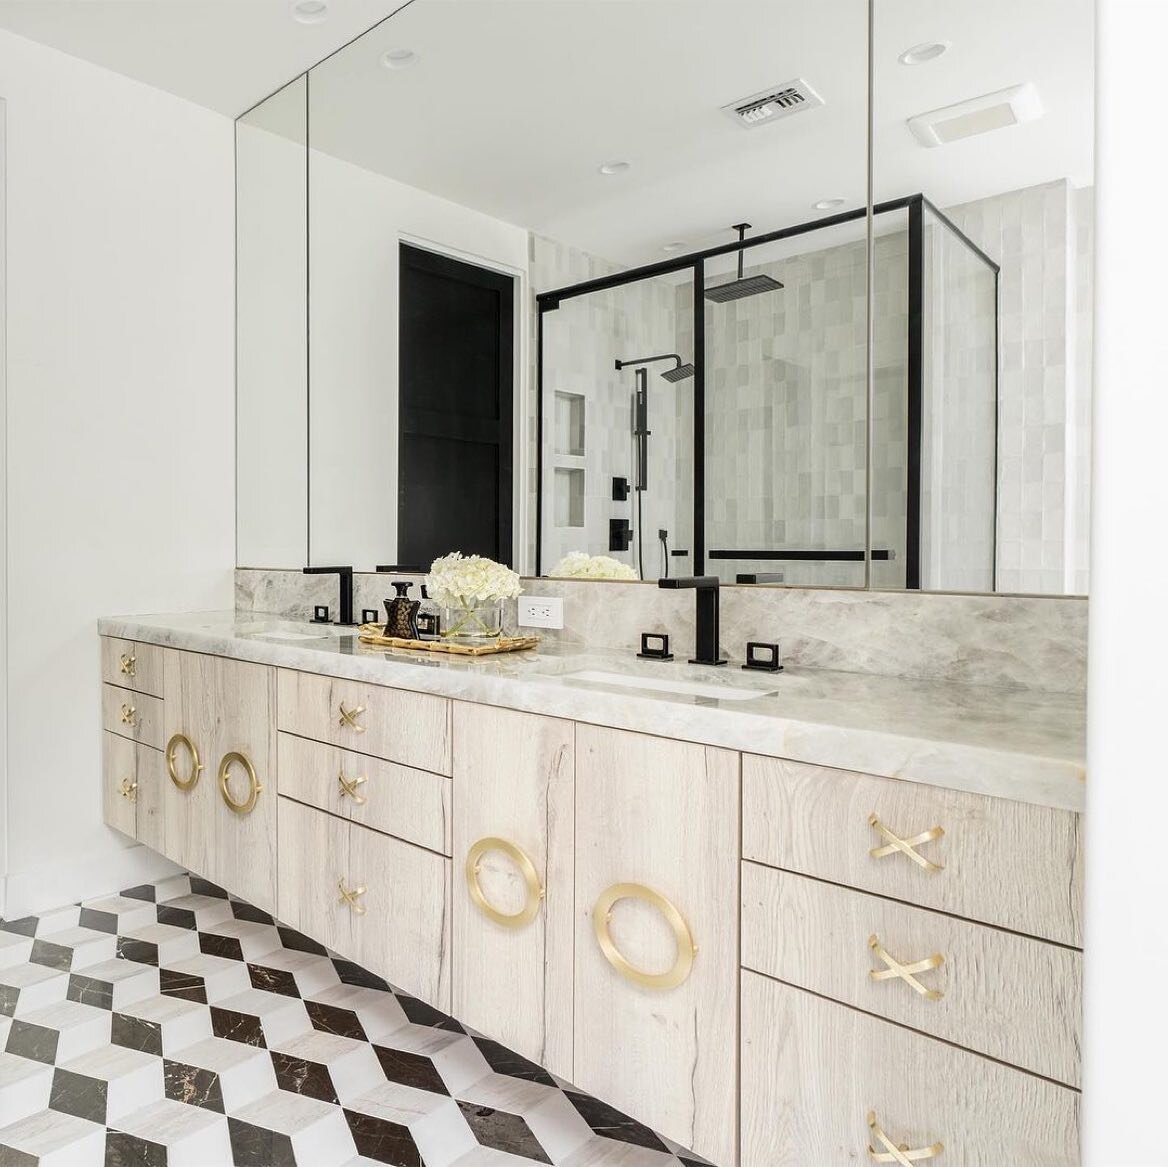 Slay is  right ⚡️💥⚡️
@mollycookeinteriors 

#classictile #tile #marble #interiors #interiordesign #interiorstyle #interiorstyling #interior4all #interiorlovers #homedesign #okc #oklahomadesigner #designlife #home #homesweethome #homedesign #bathroom